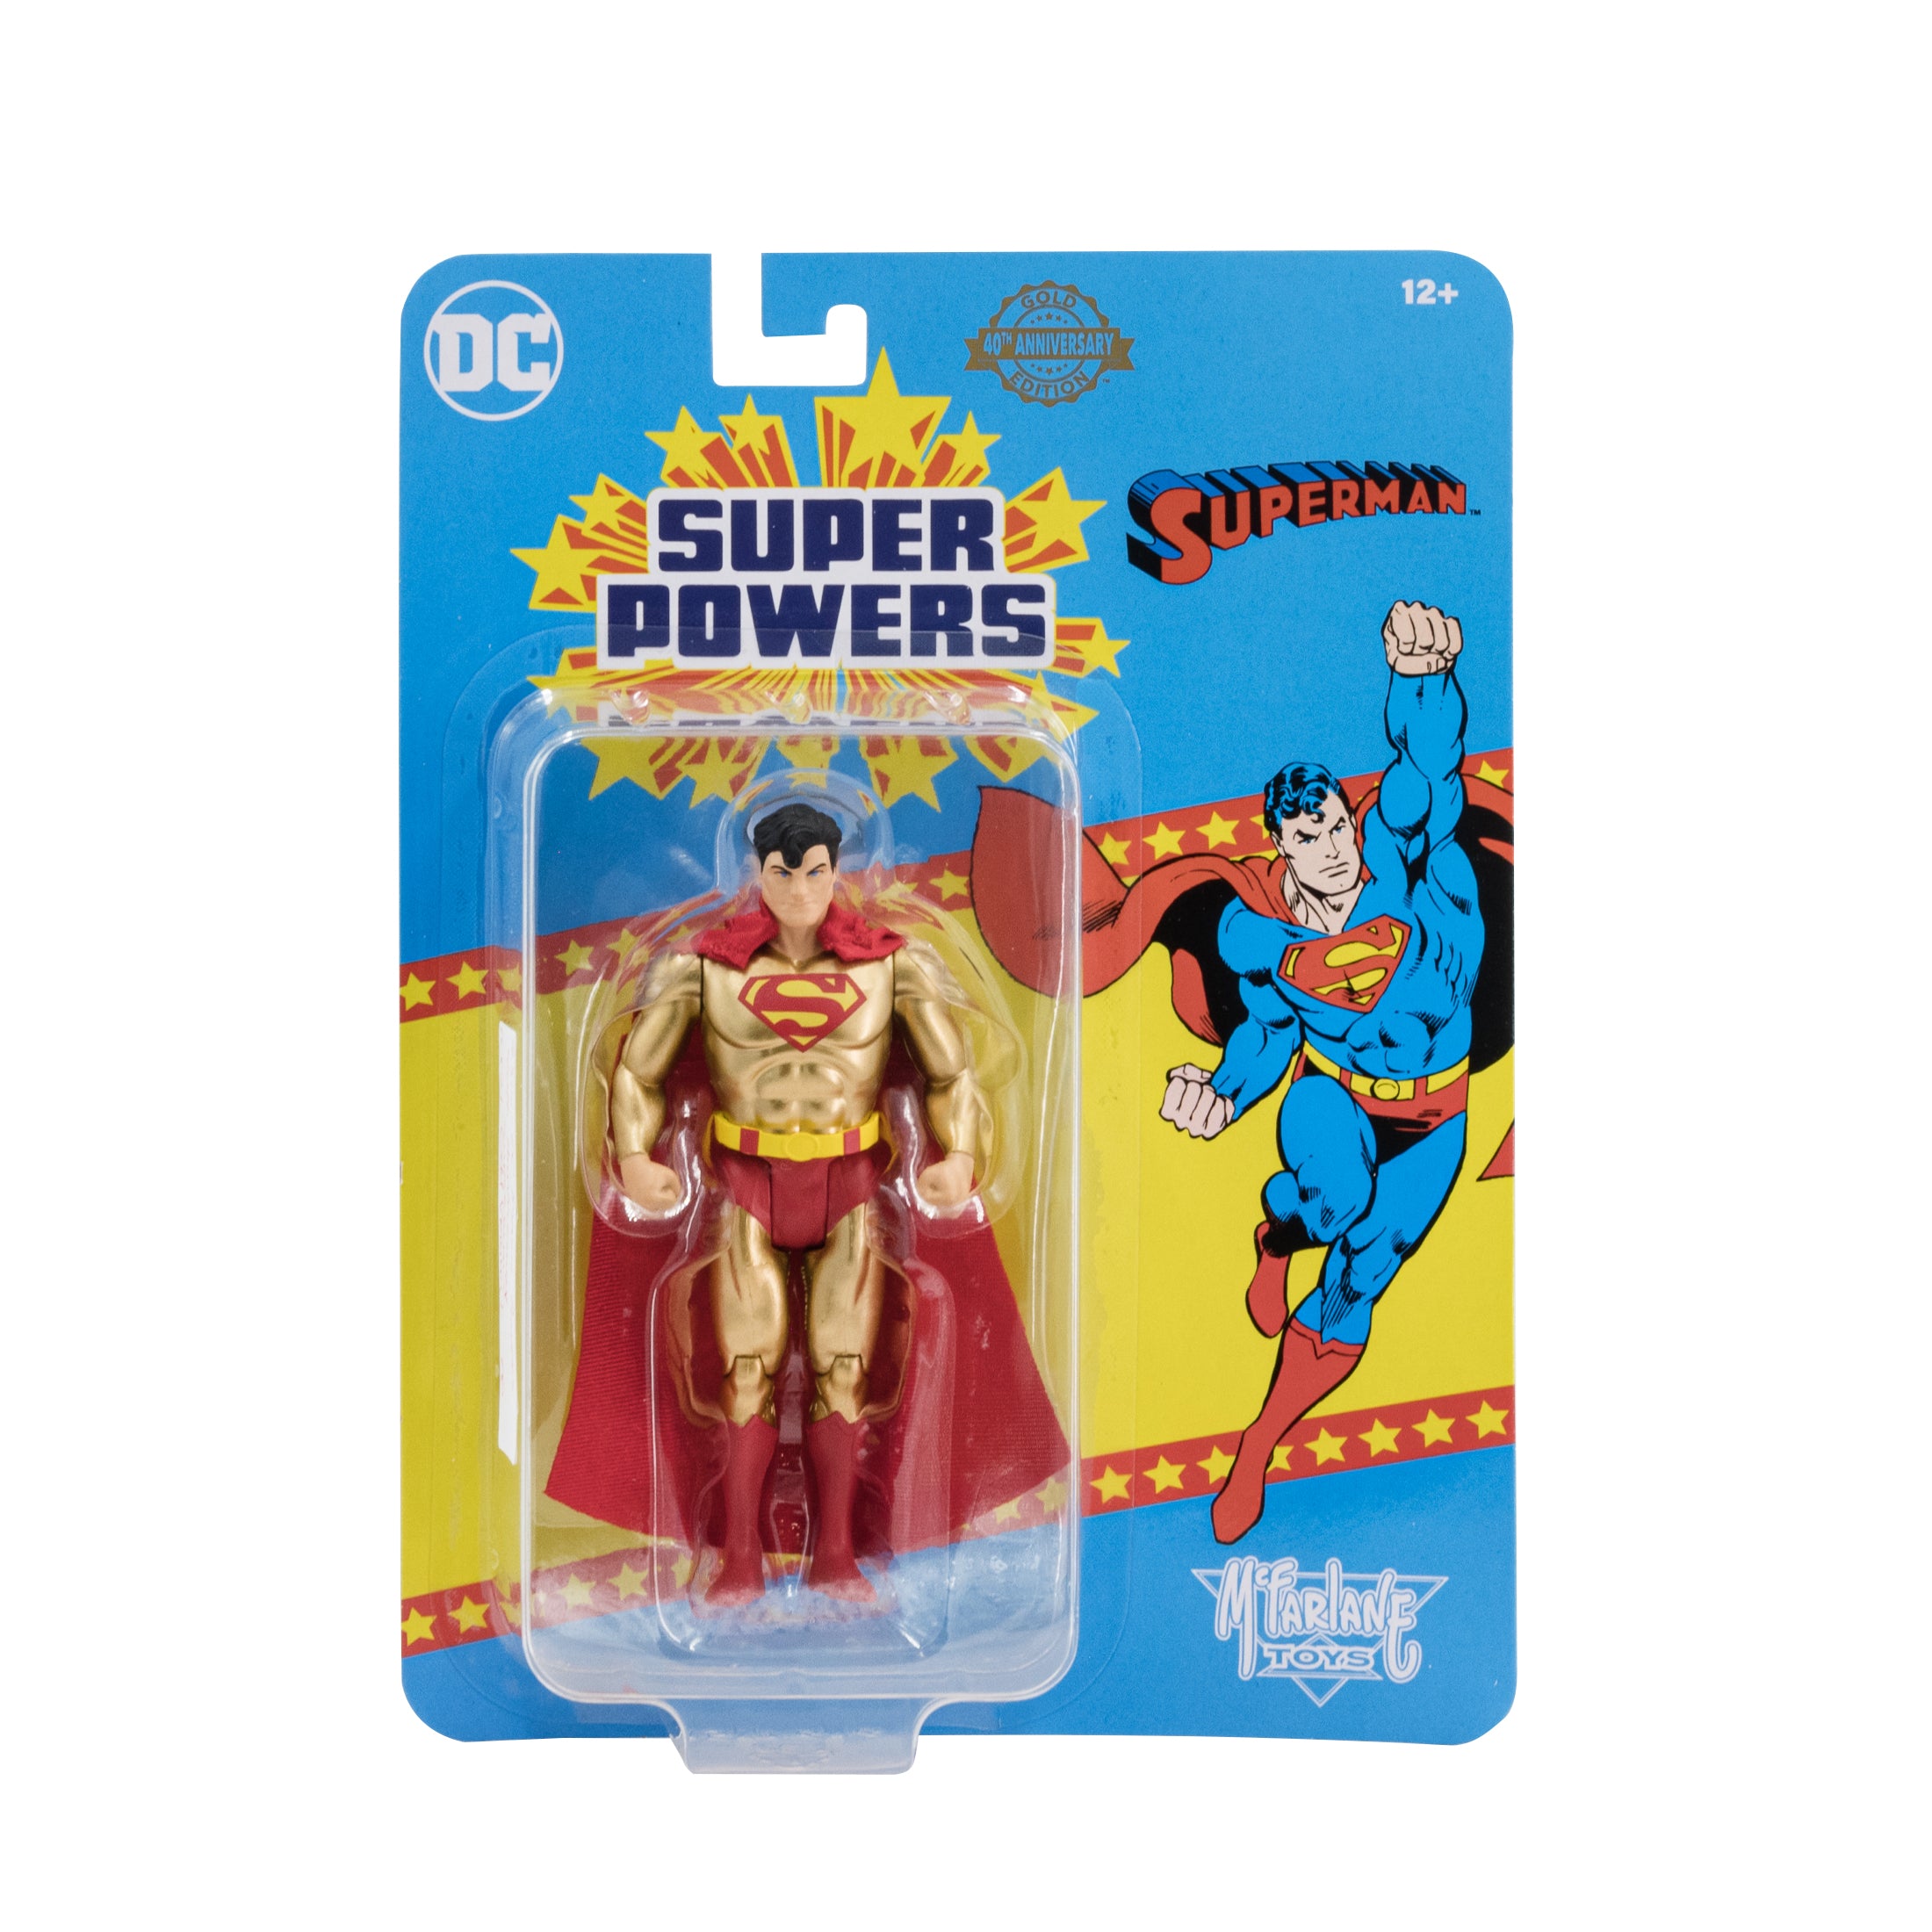 DC Direct Super Powers Figura de Accion: DC Comics Superman 40 Aniversario - Superman Gold Edition 4.5 Pulgadas